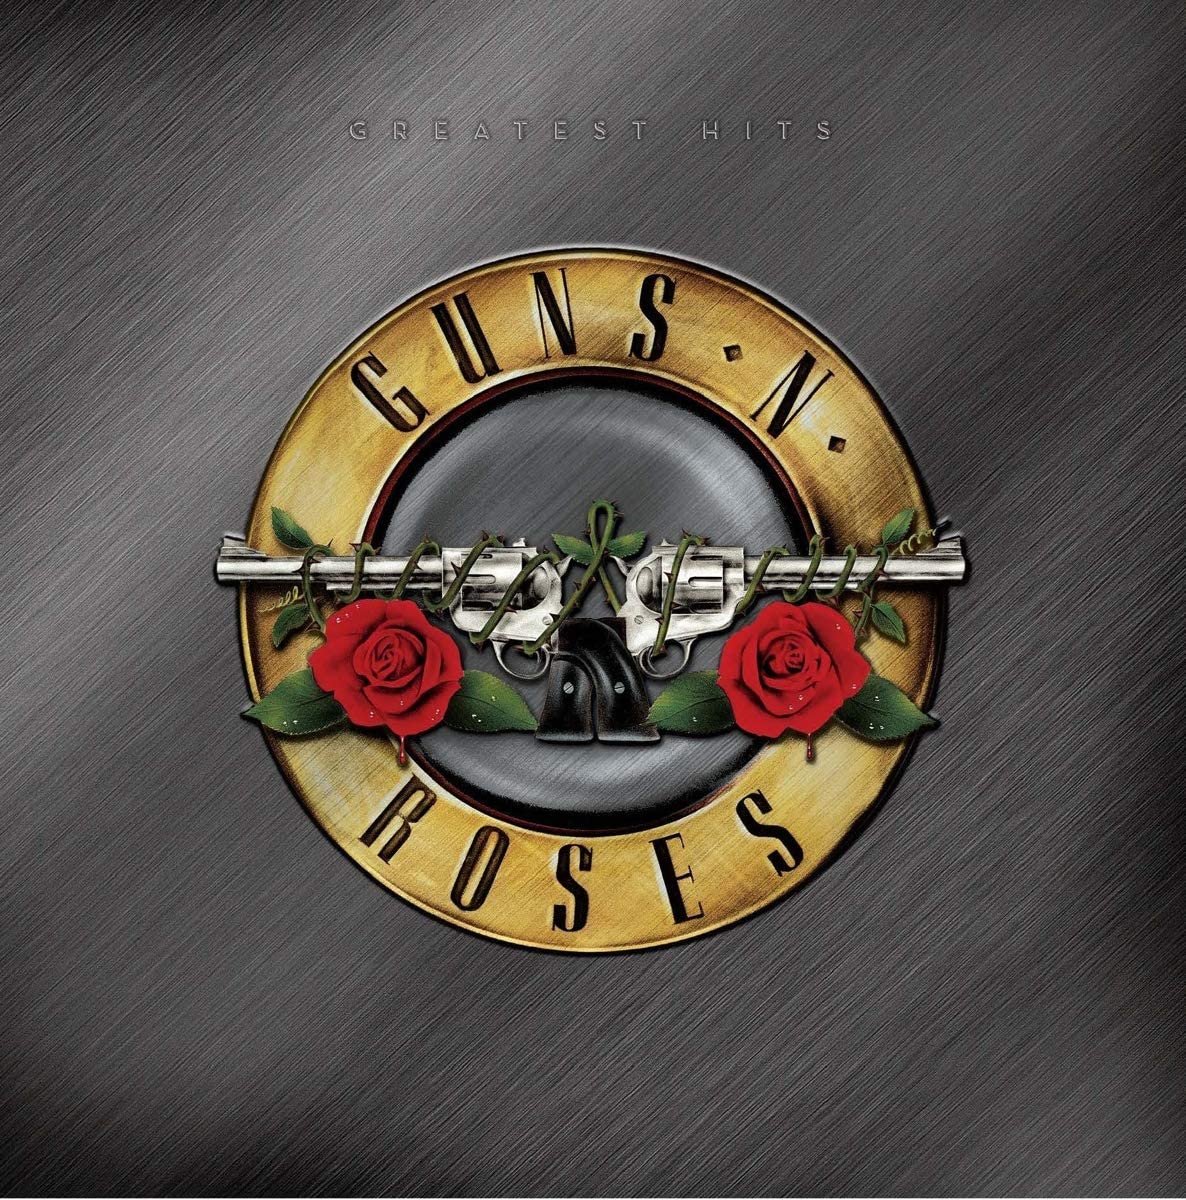 Guns N' Roses' Appetite For Destruction gets a major reissue with